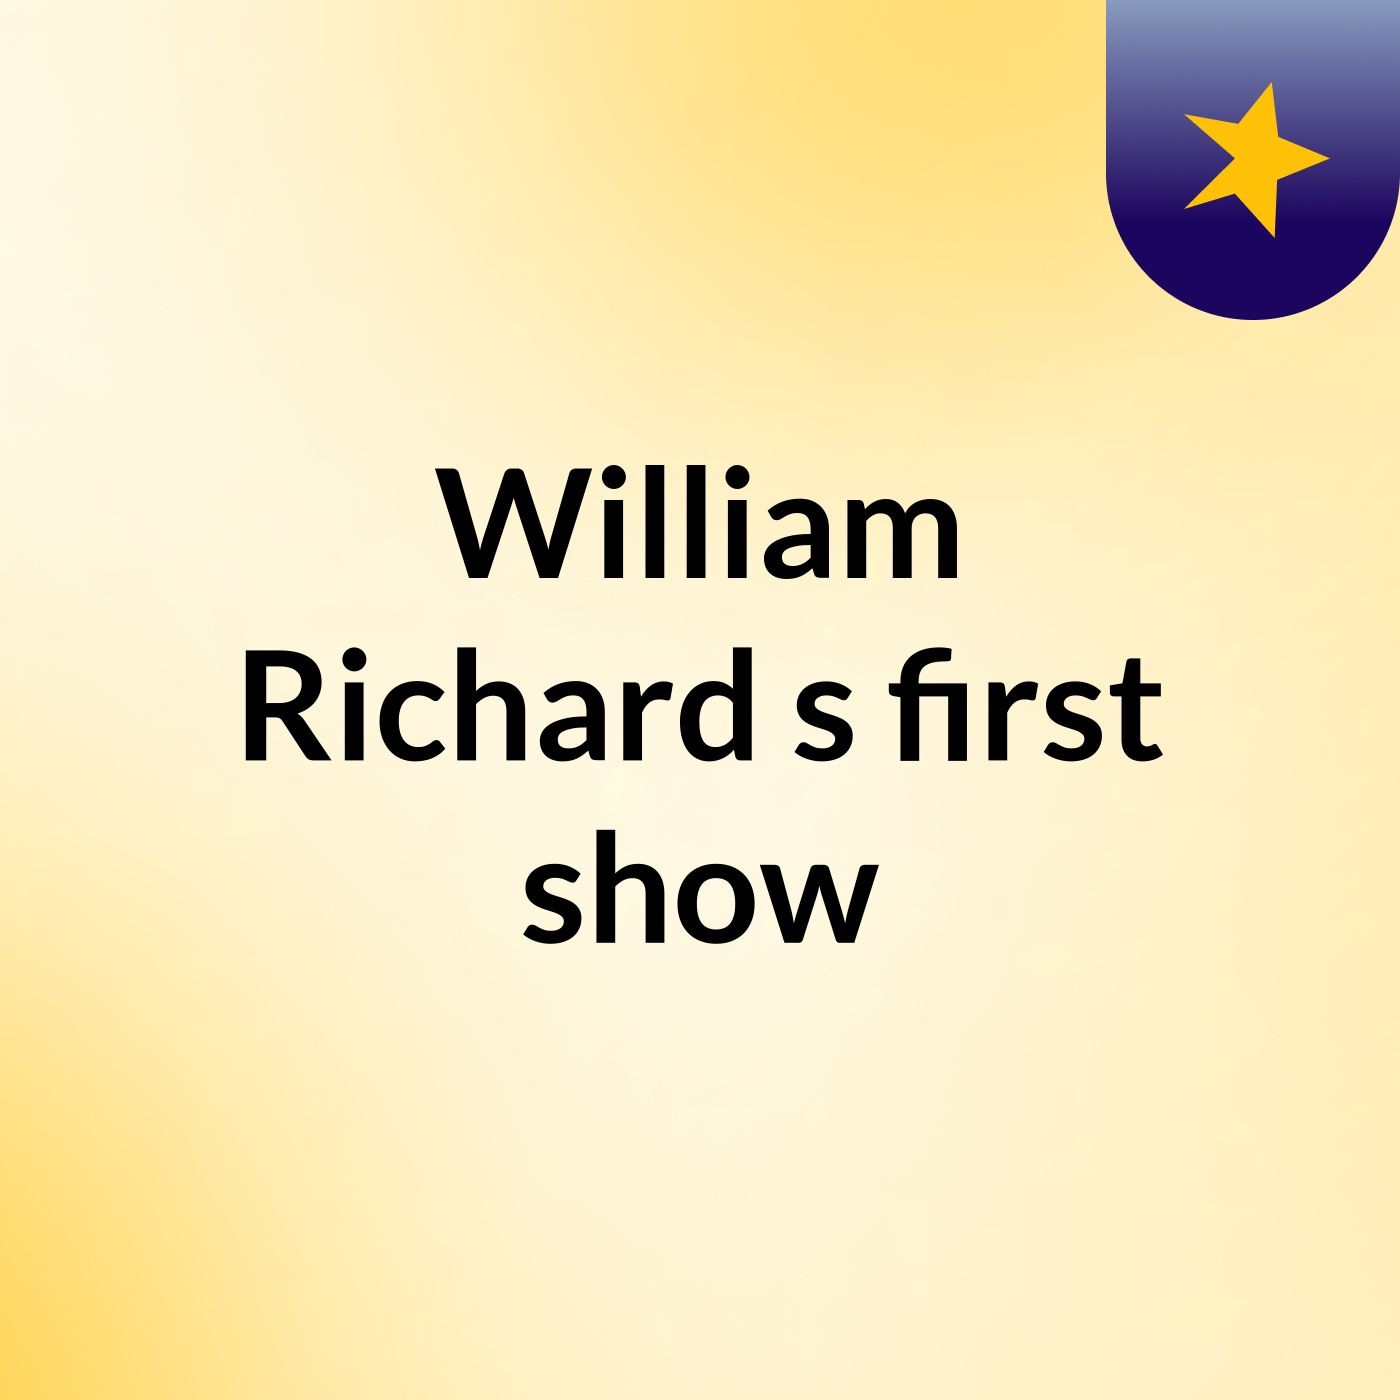 William Richard's first show